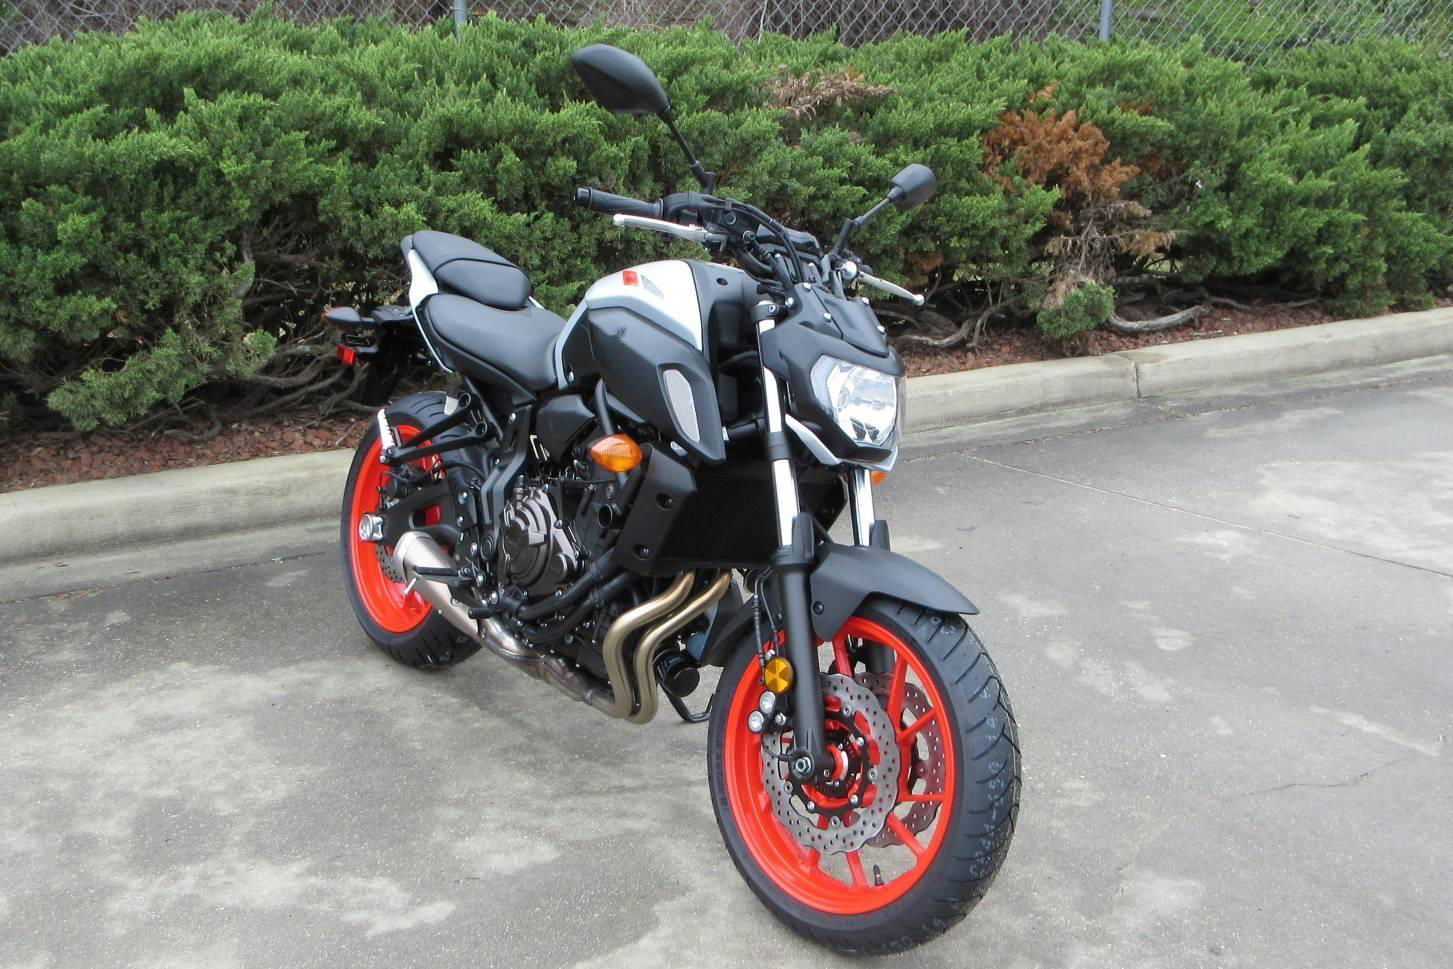 Top Sale New MT-07 Sport Motorcycle 5